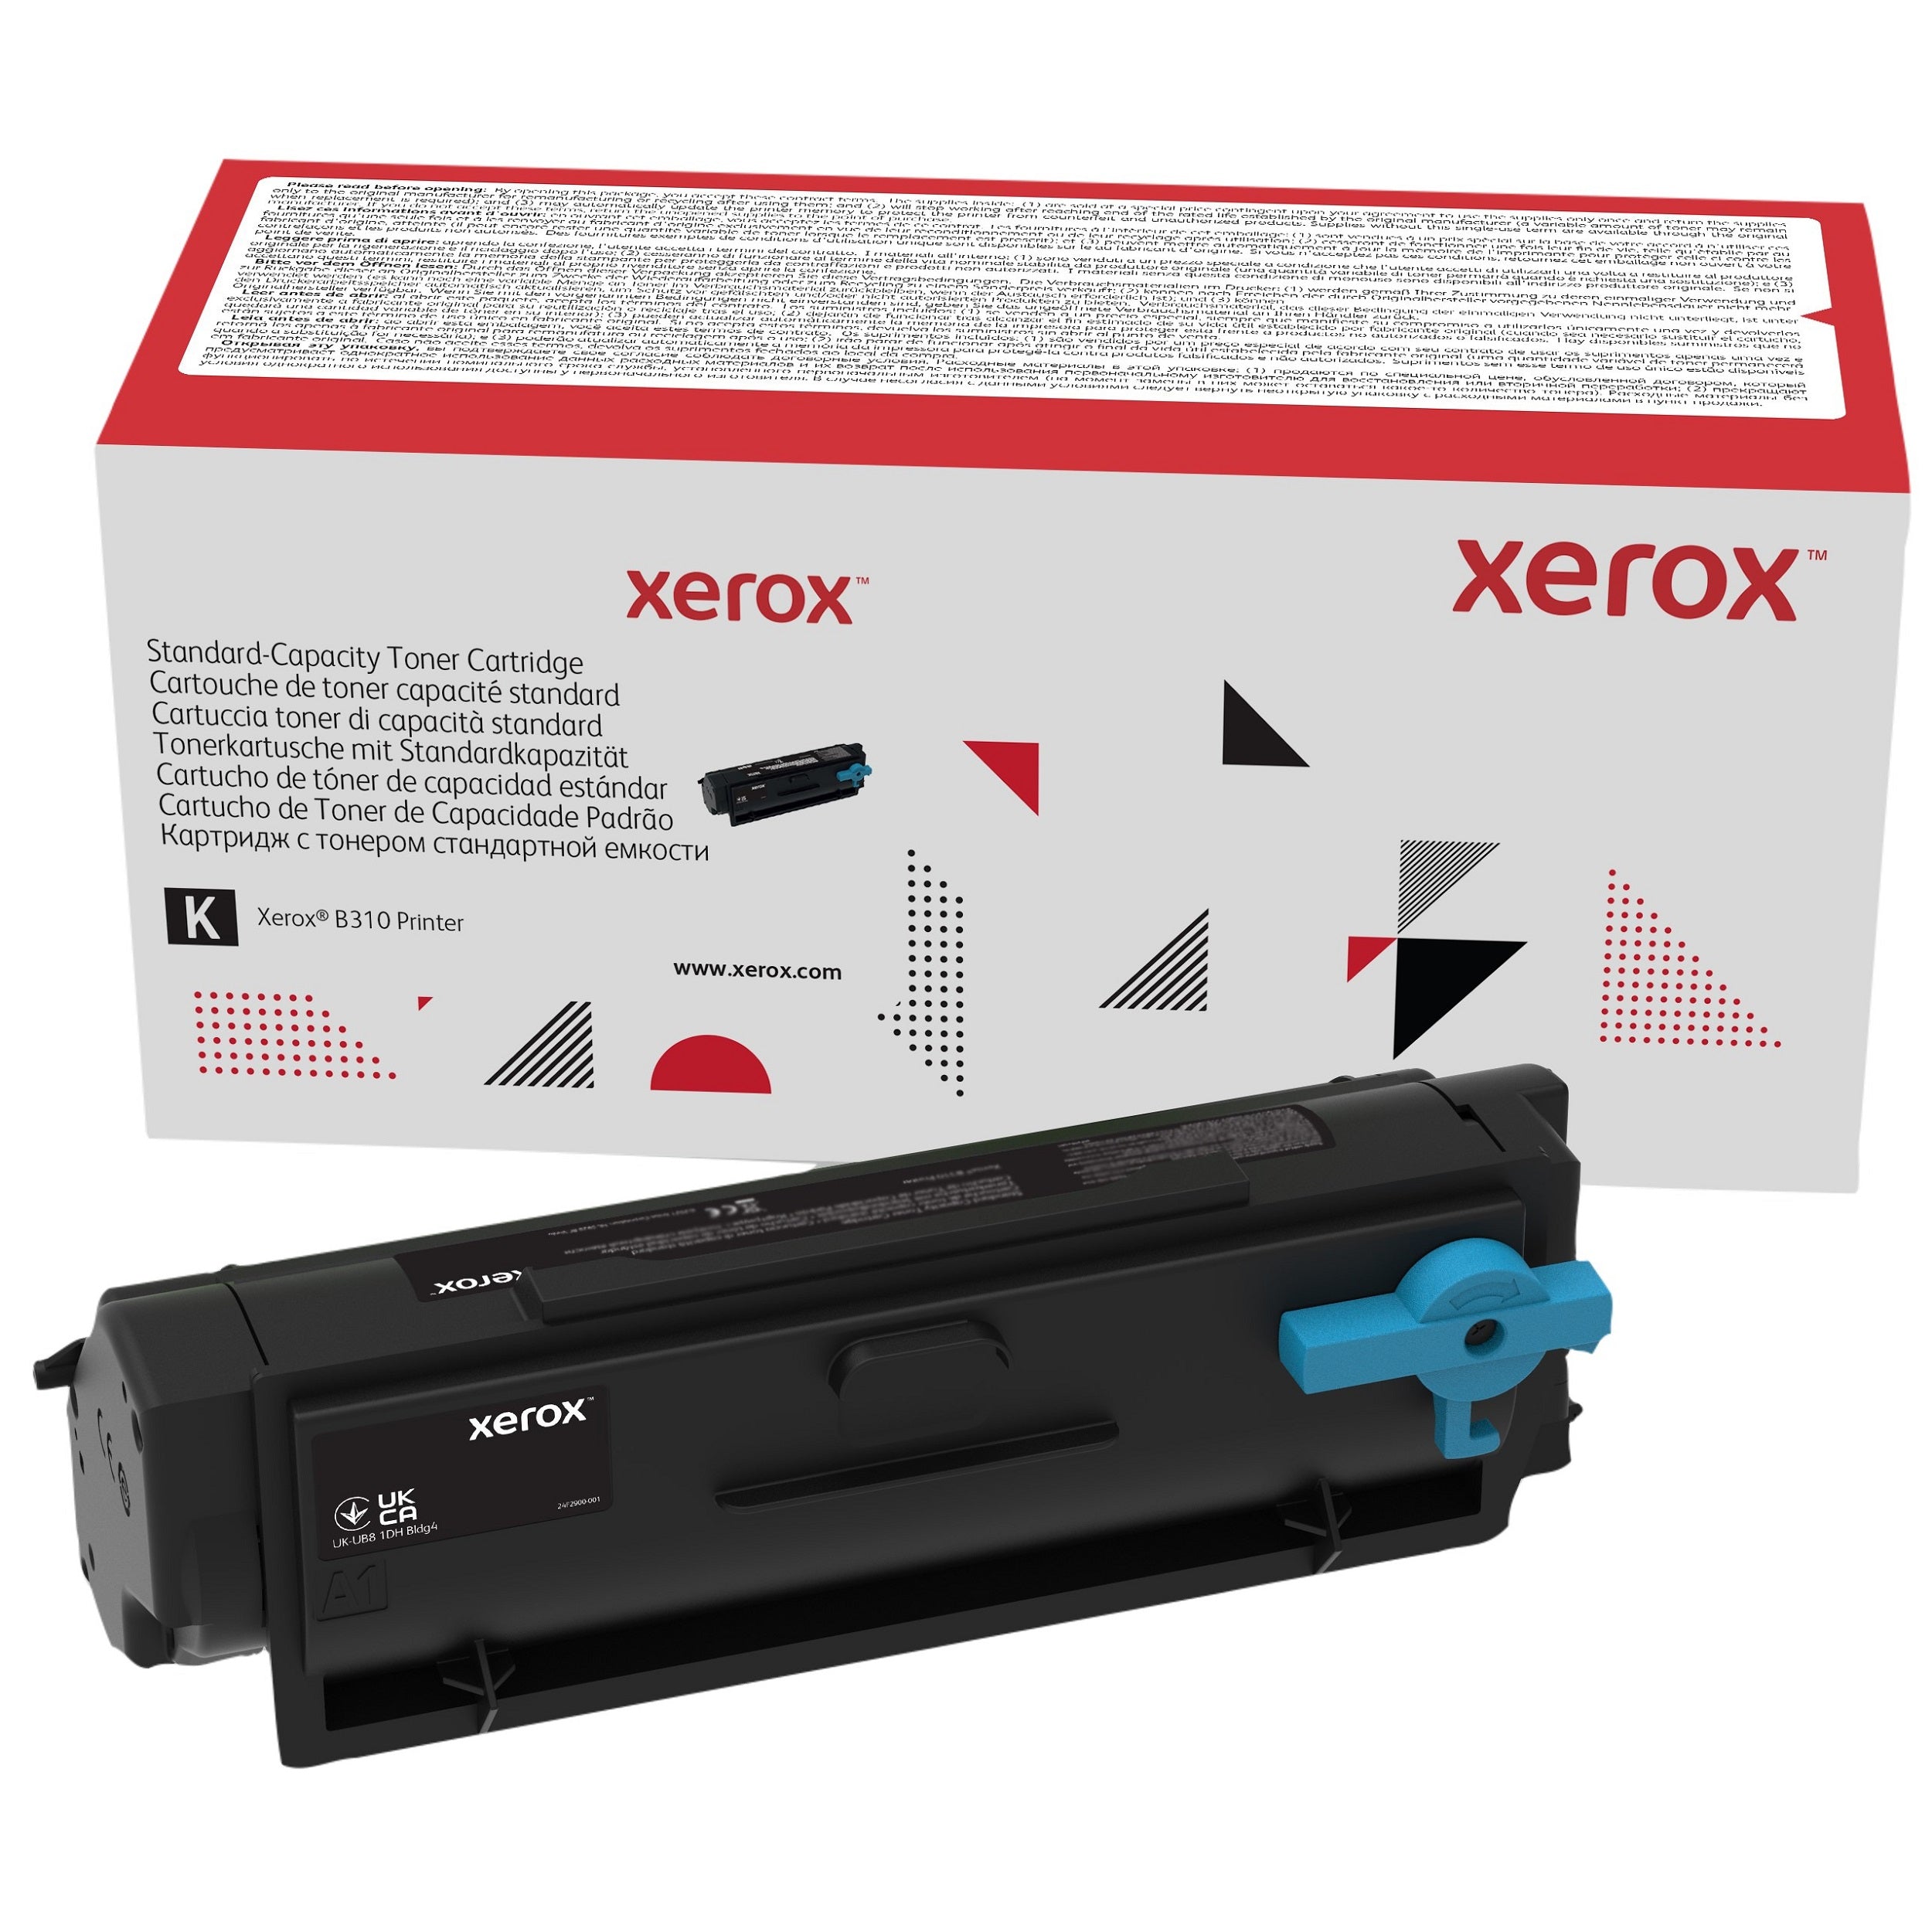 Absolute Toner Genuine Xerox 006R04376 Black Toner Cartridge (3,000 pages) Original Xerox Cartridges